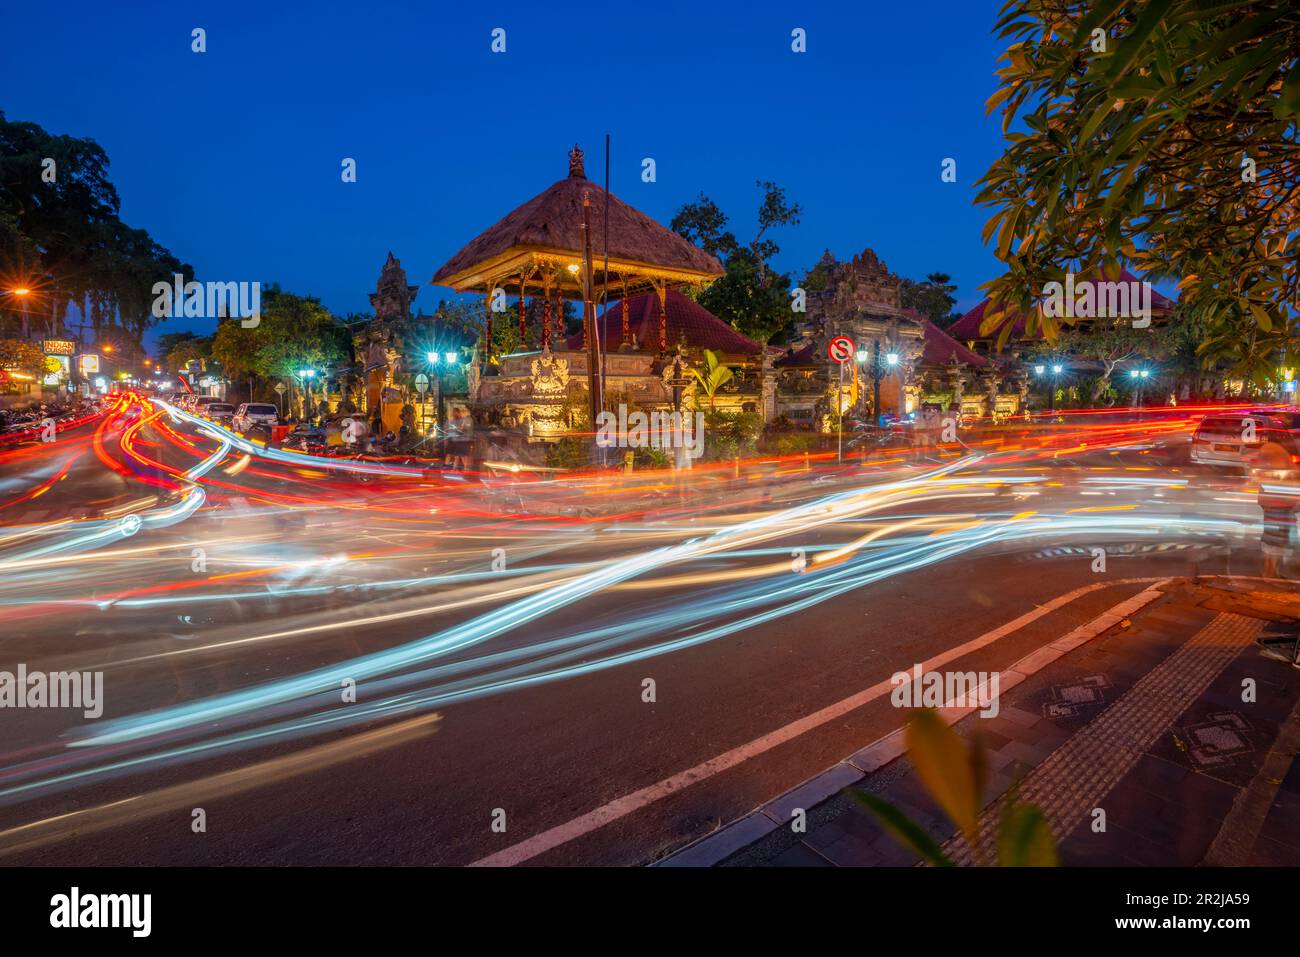 View of car trail lights and Ubud Palace at dusk, Ubud, Kabupaten Gianyar, Bali, Indonesia, South East Asia, Asia Stock Photo